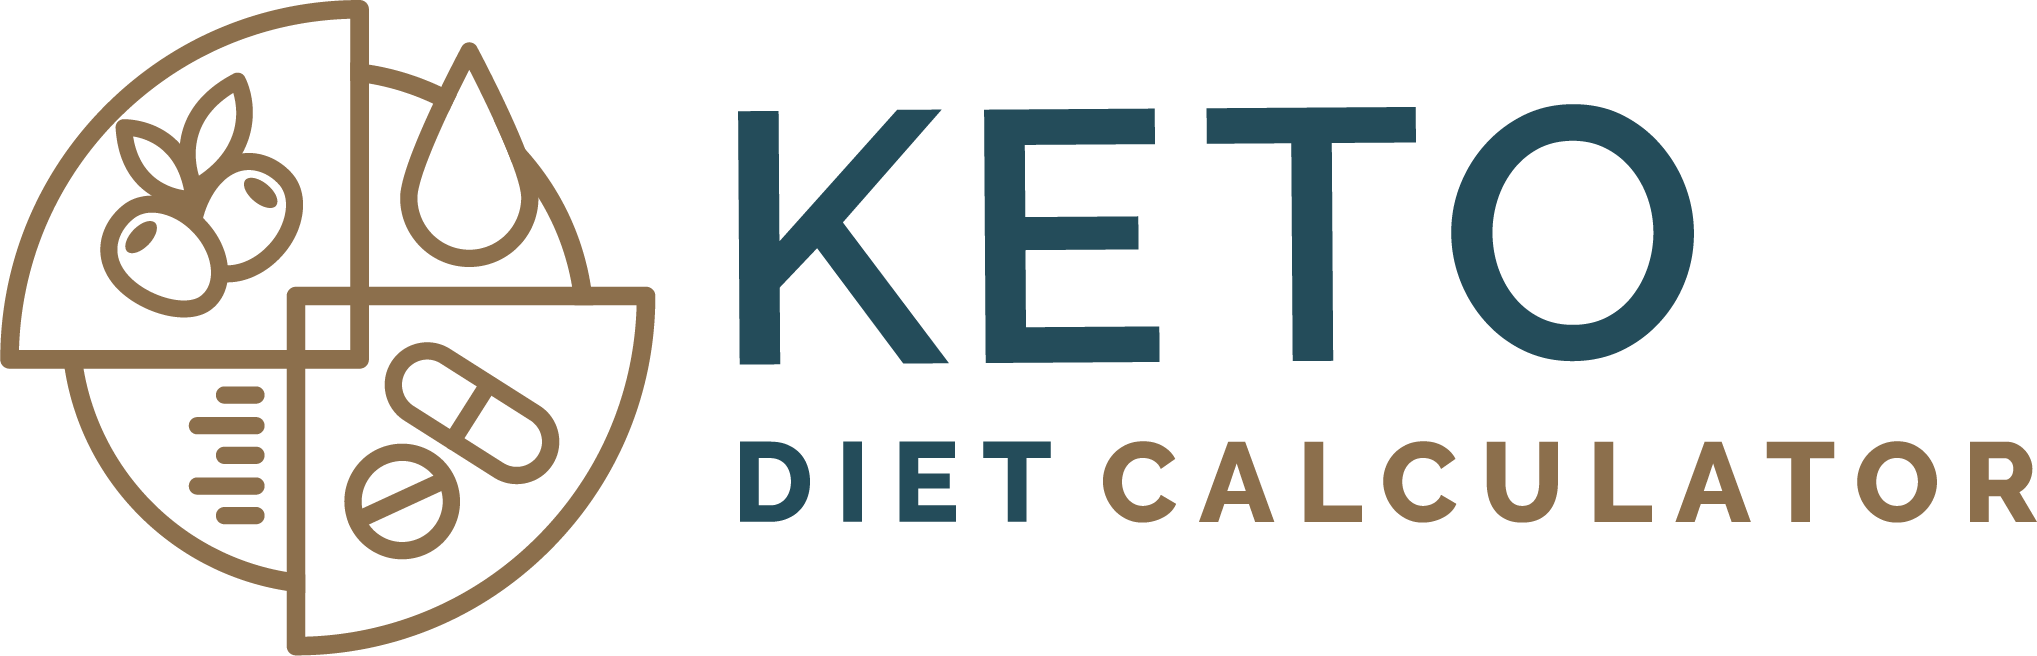 Keto Diet Calculator logo